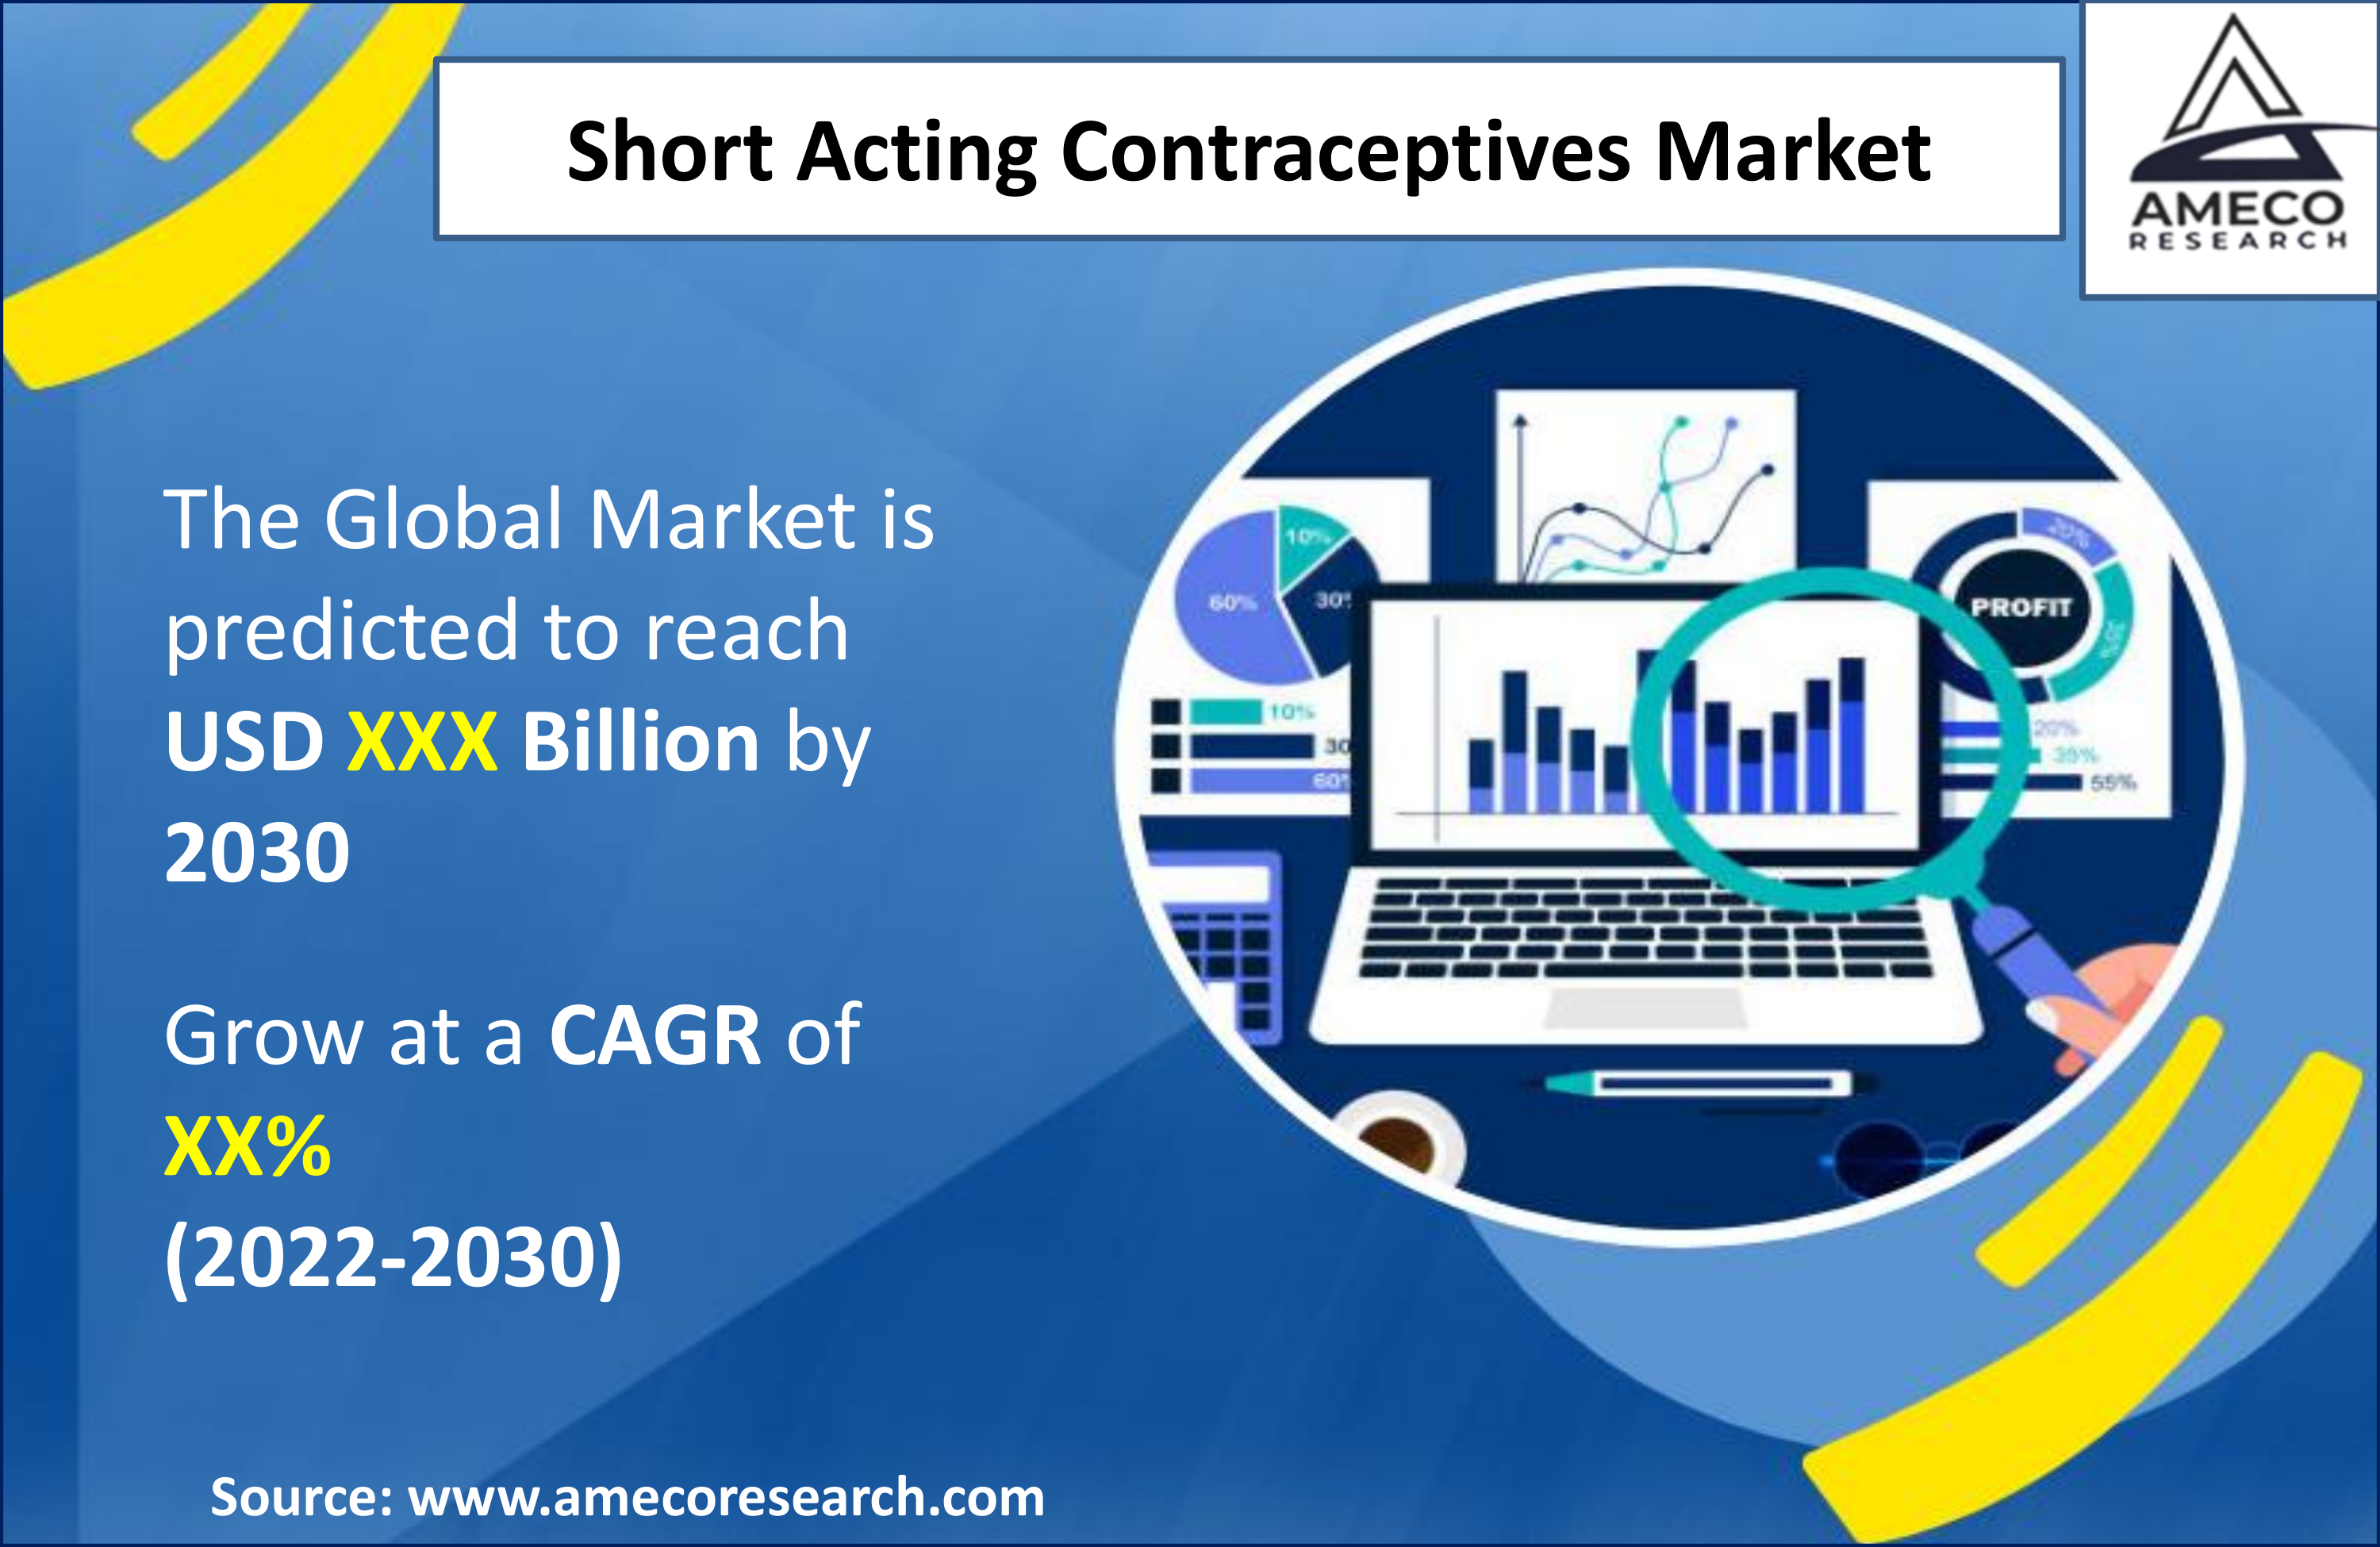 Short Acting Contraceptives Market